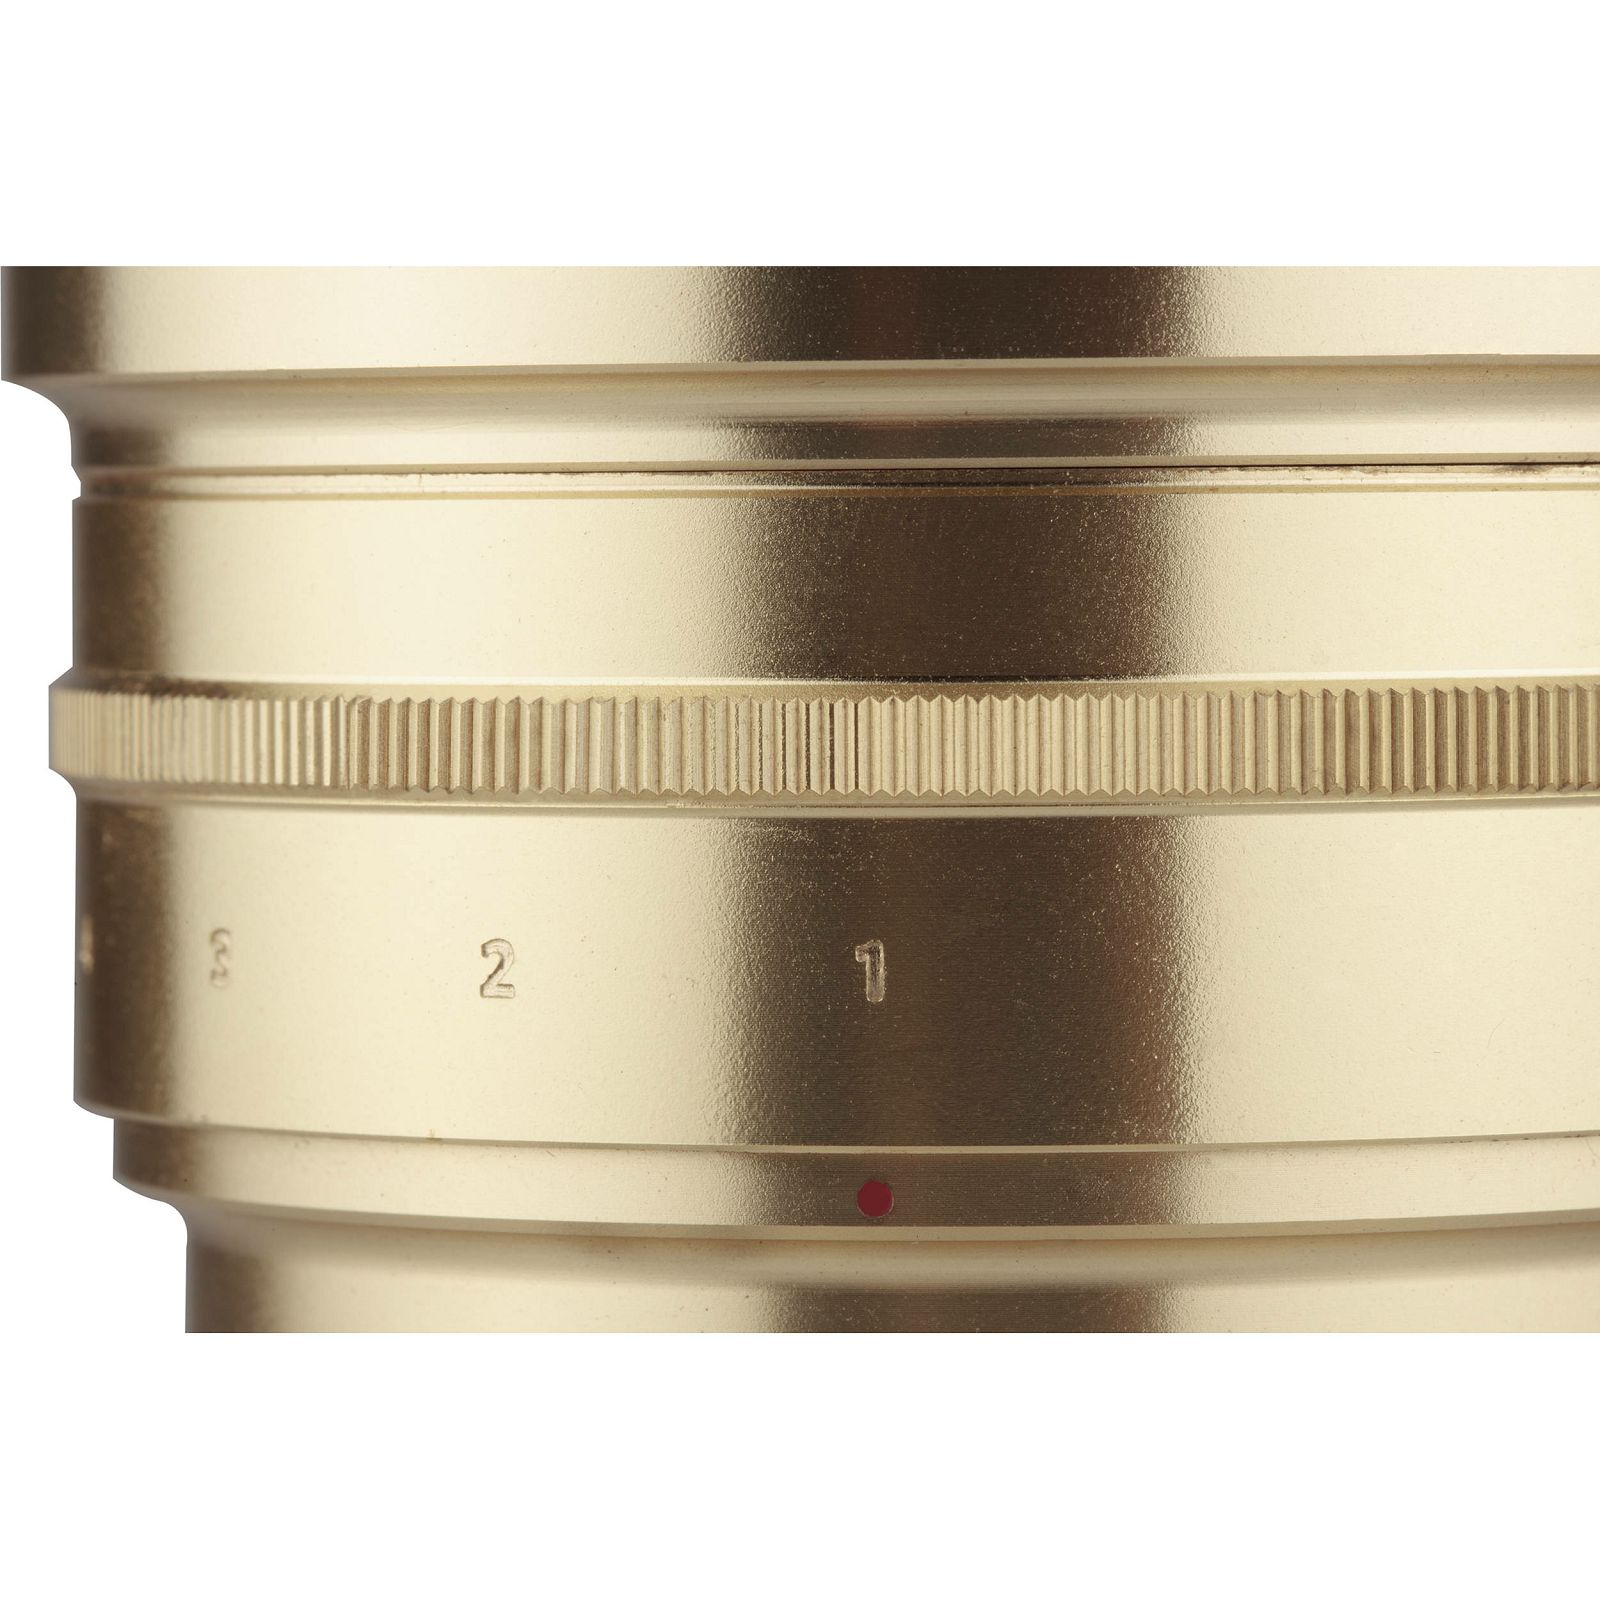 Lomography Petzval 58mm f/1.9 Bokeh Control Art Lens Brass objektiv za Canon EF (Z260C)